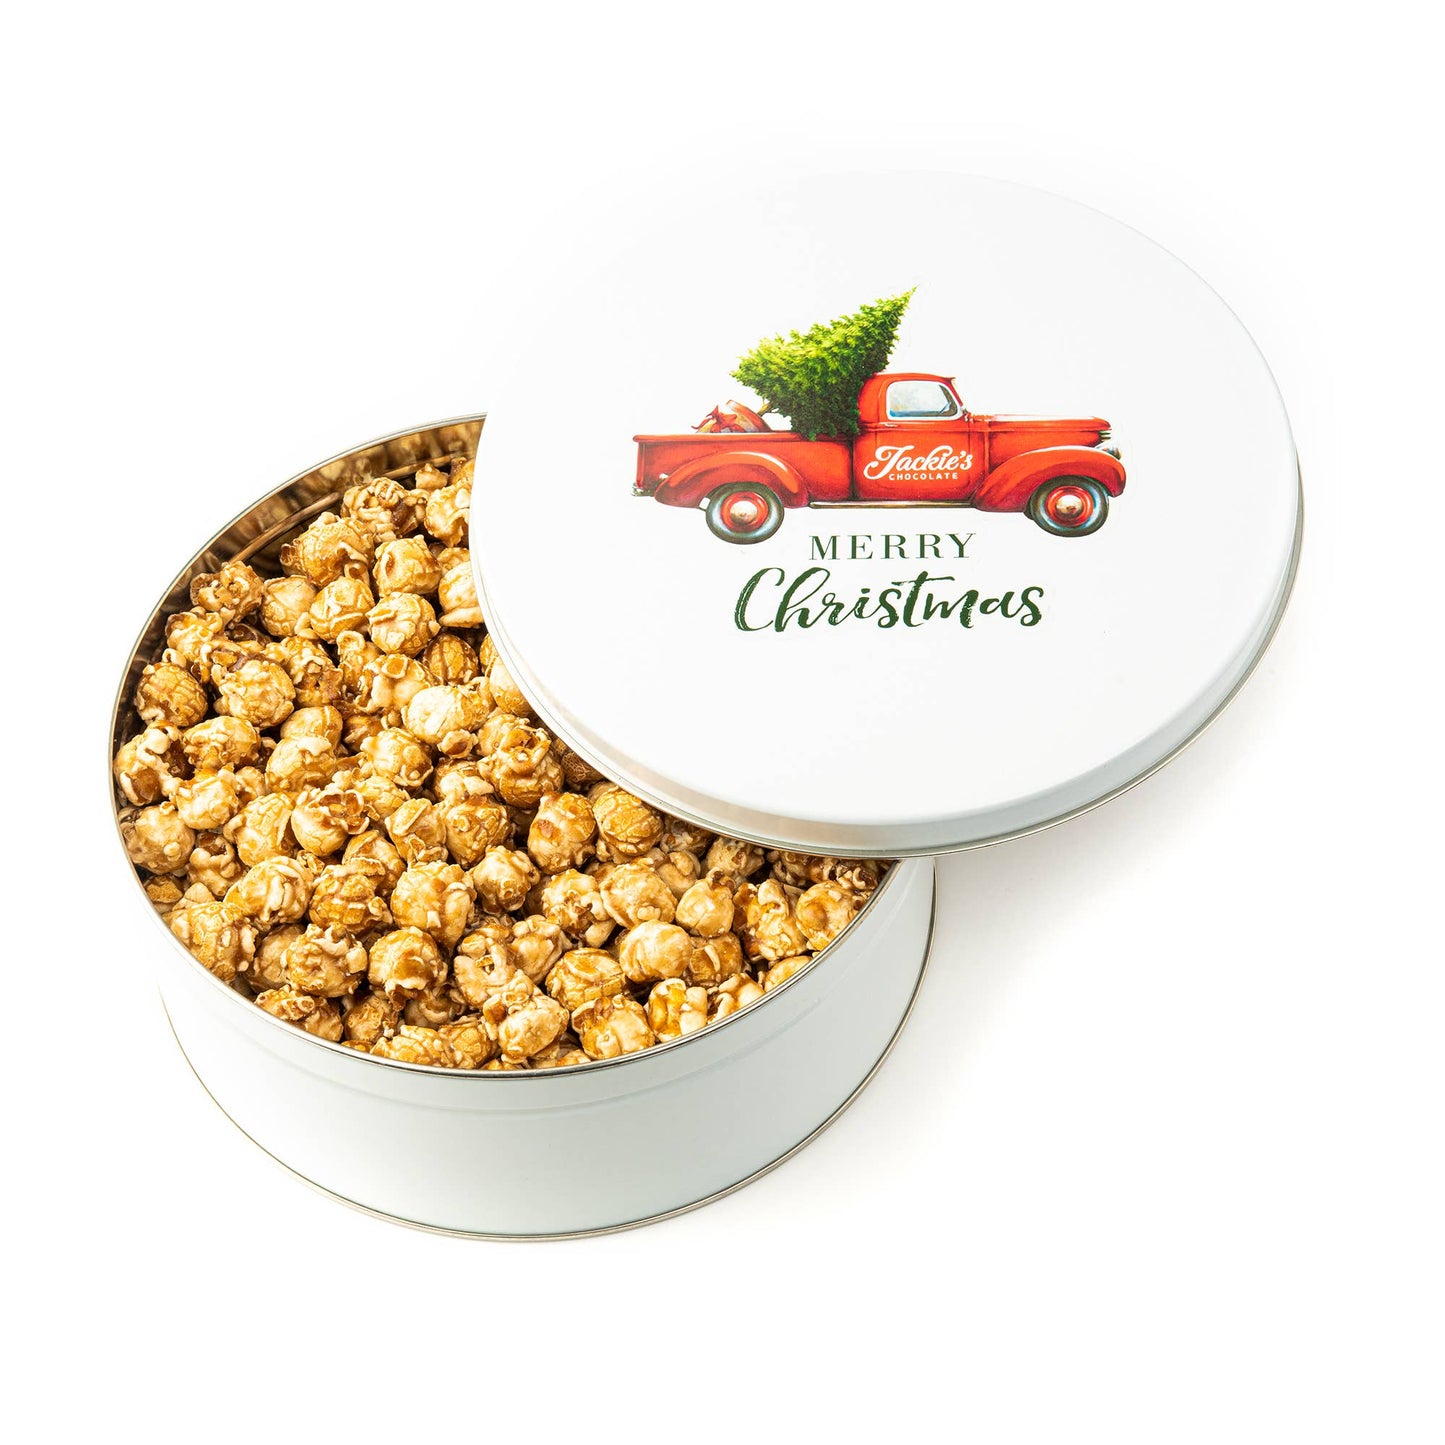 Jackie's - Caramel Popcorn Holiday Candy Christmas Gift Tin